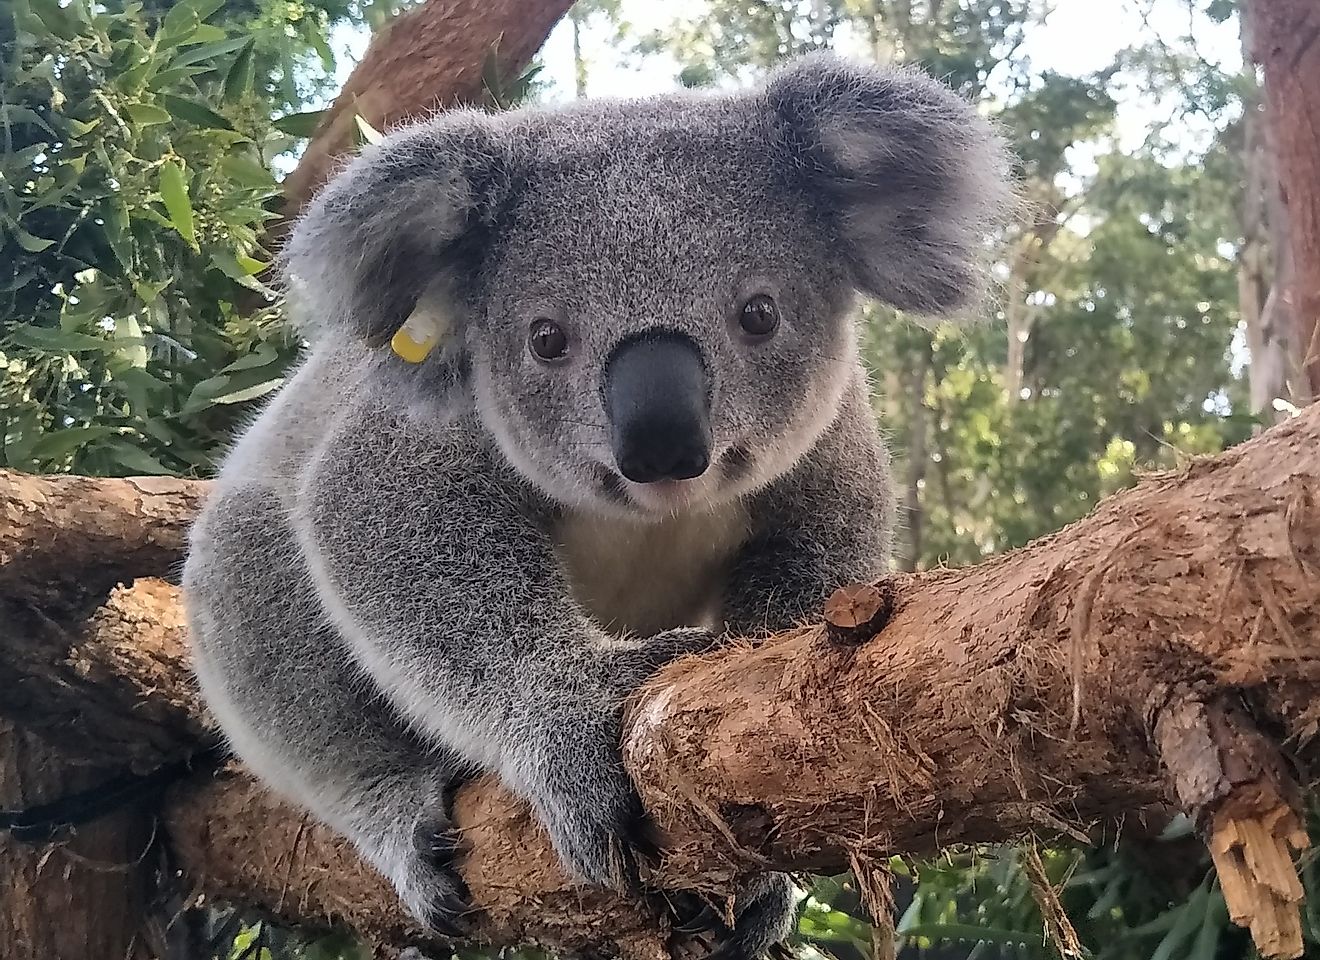 Balmoral Mini, a rescued koala at the Koala Hospital. Photo credit: the Port Macquarie Koala Hospital.